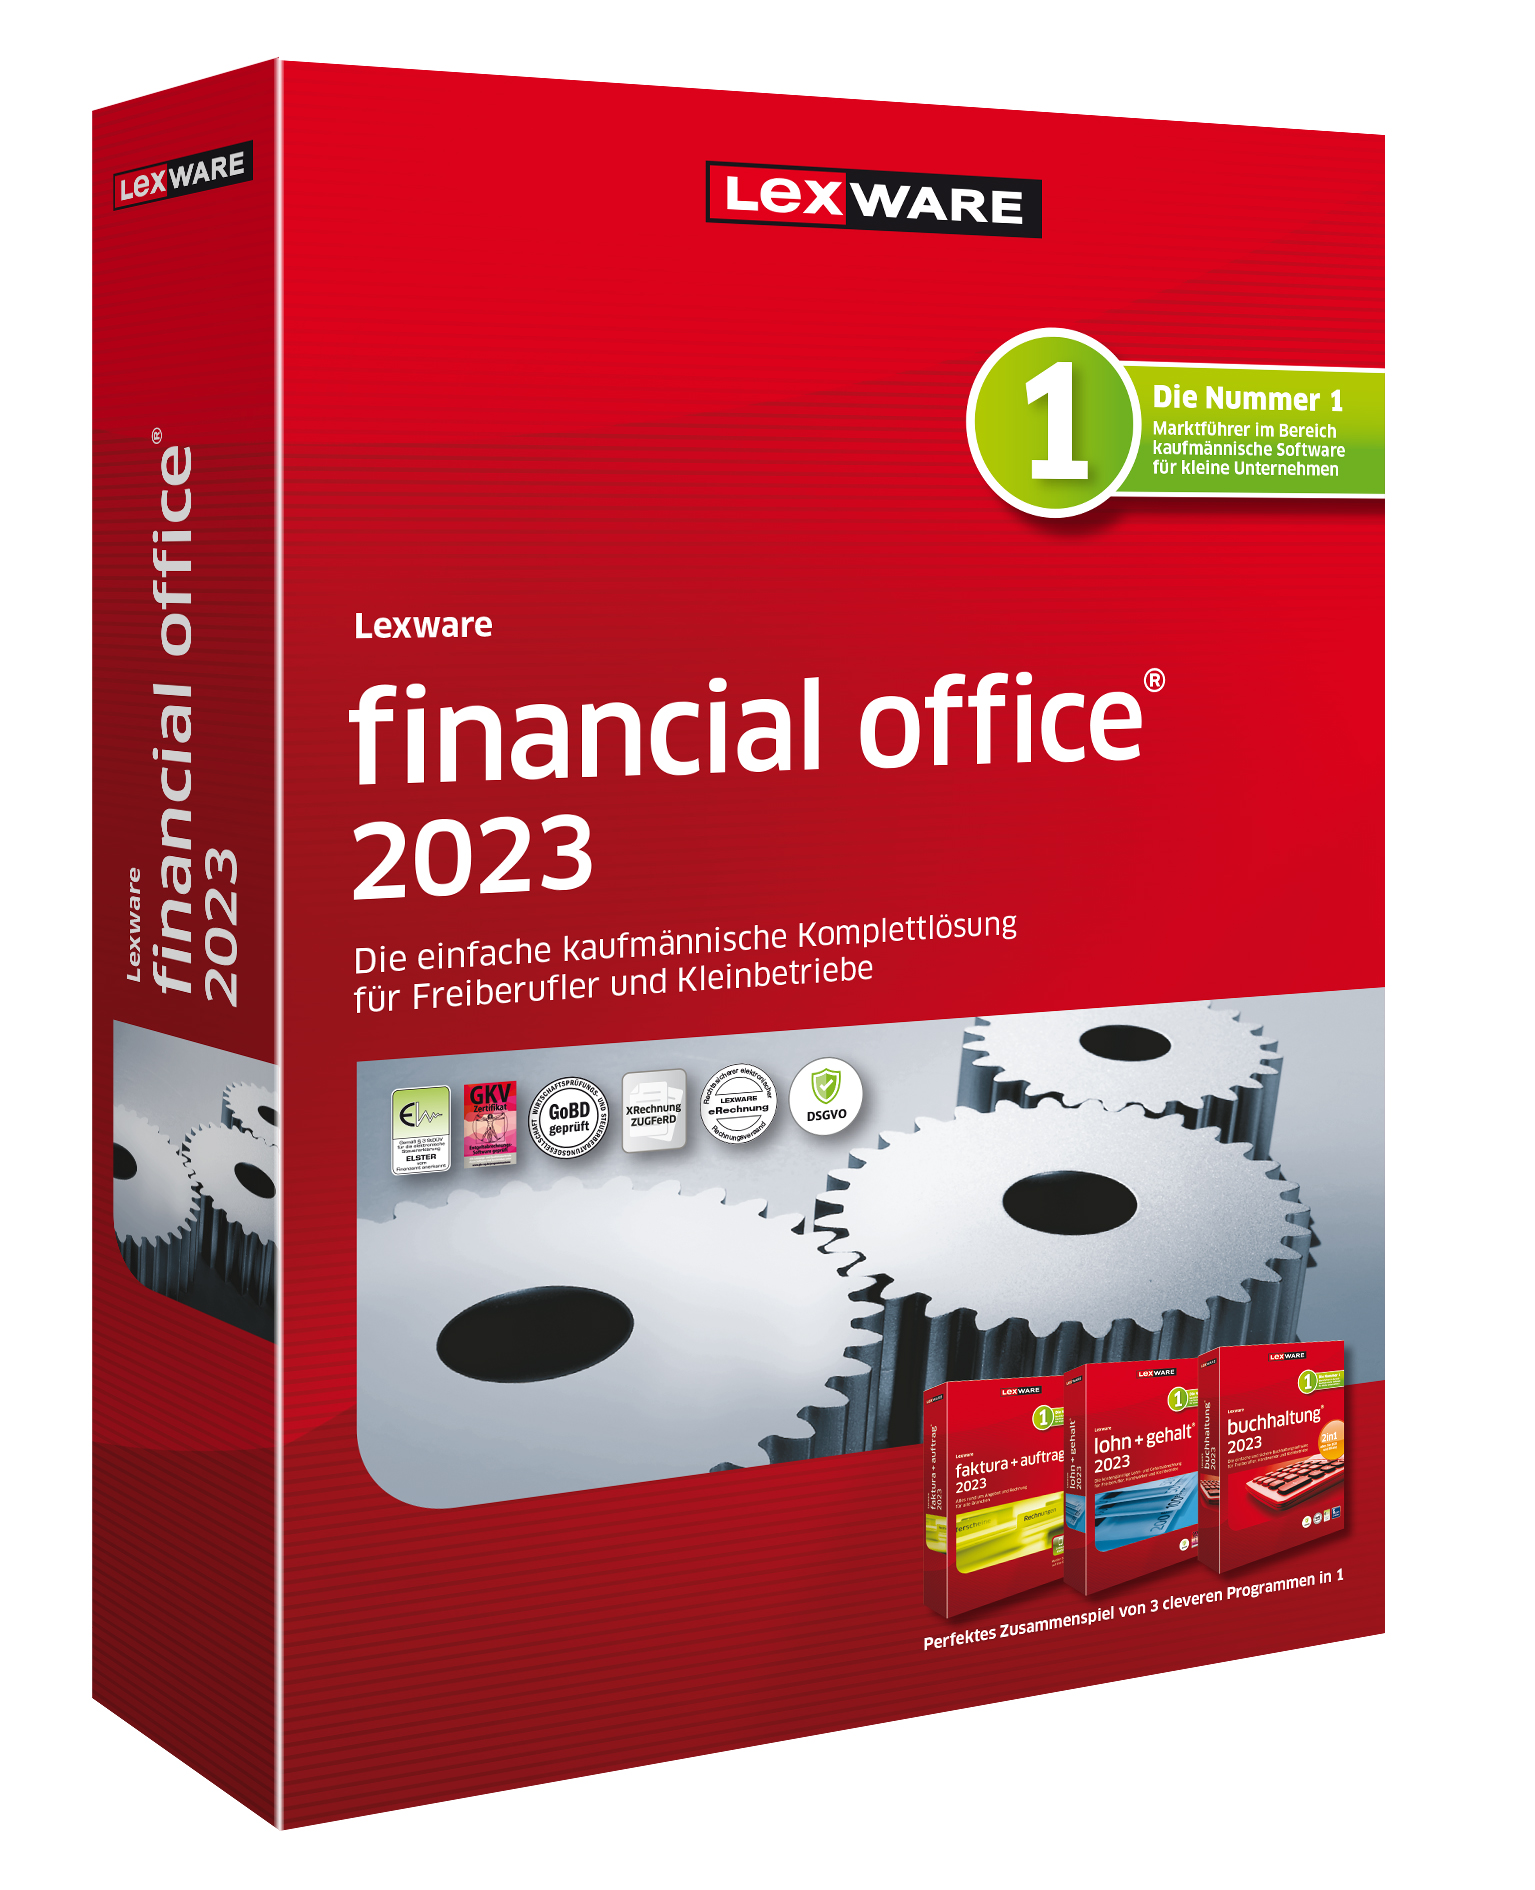 Lexware financial office basis Version: Standard / Zahlweise: monatliche Zahlung